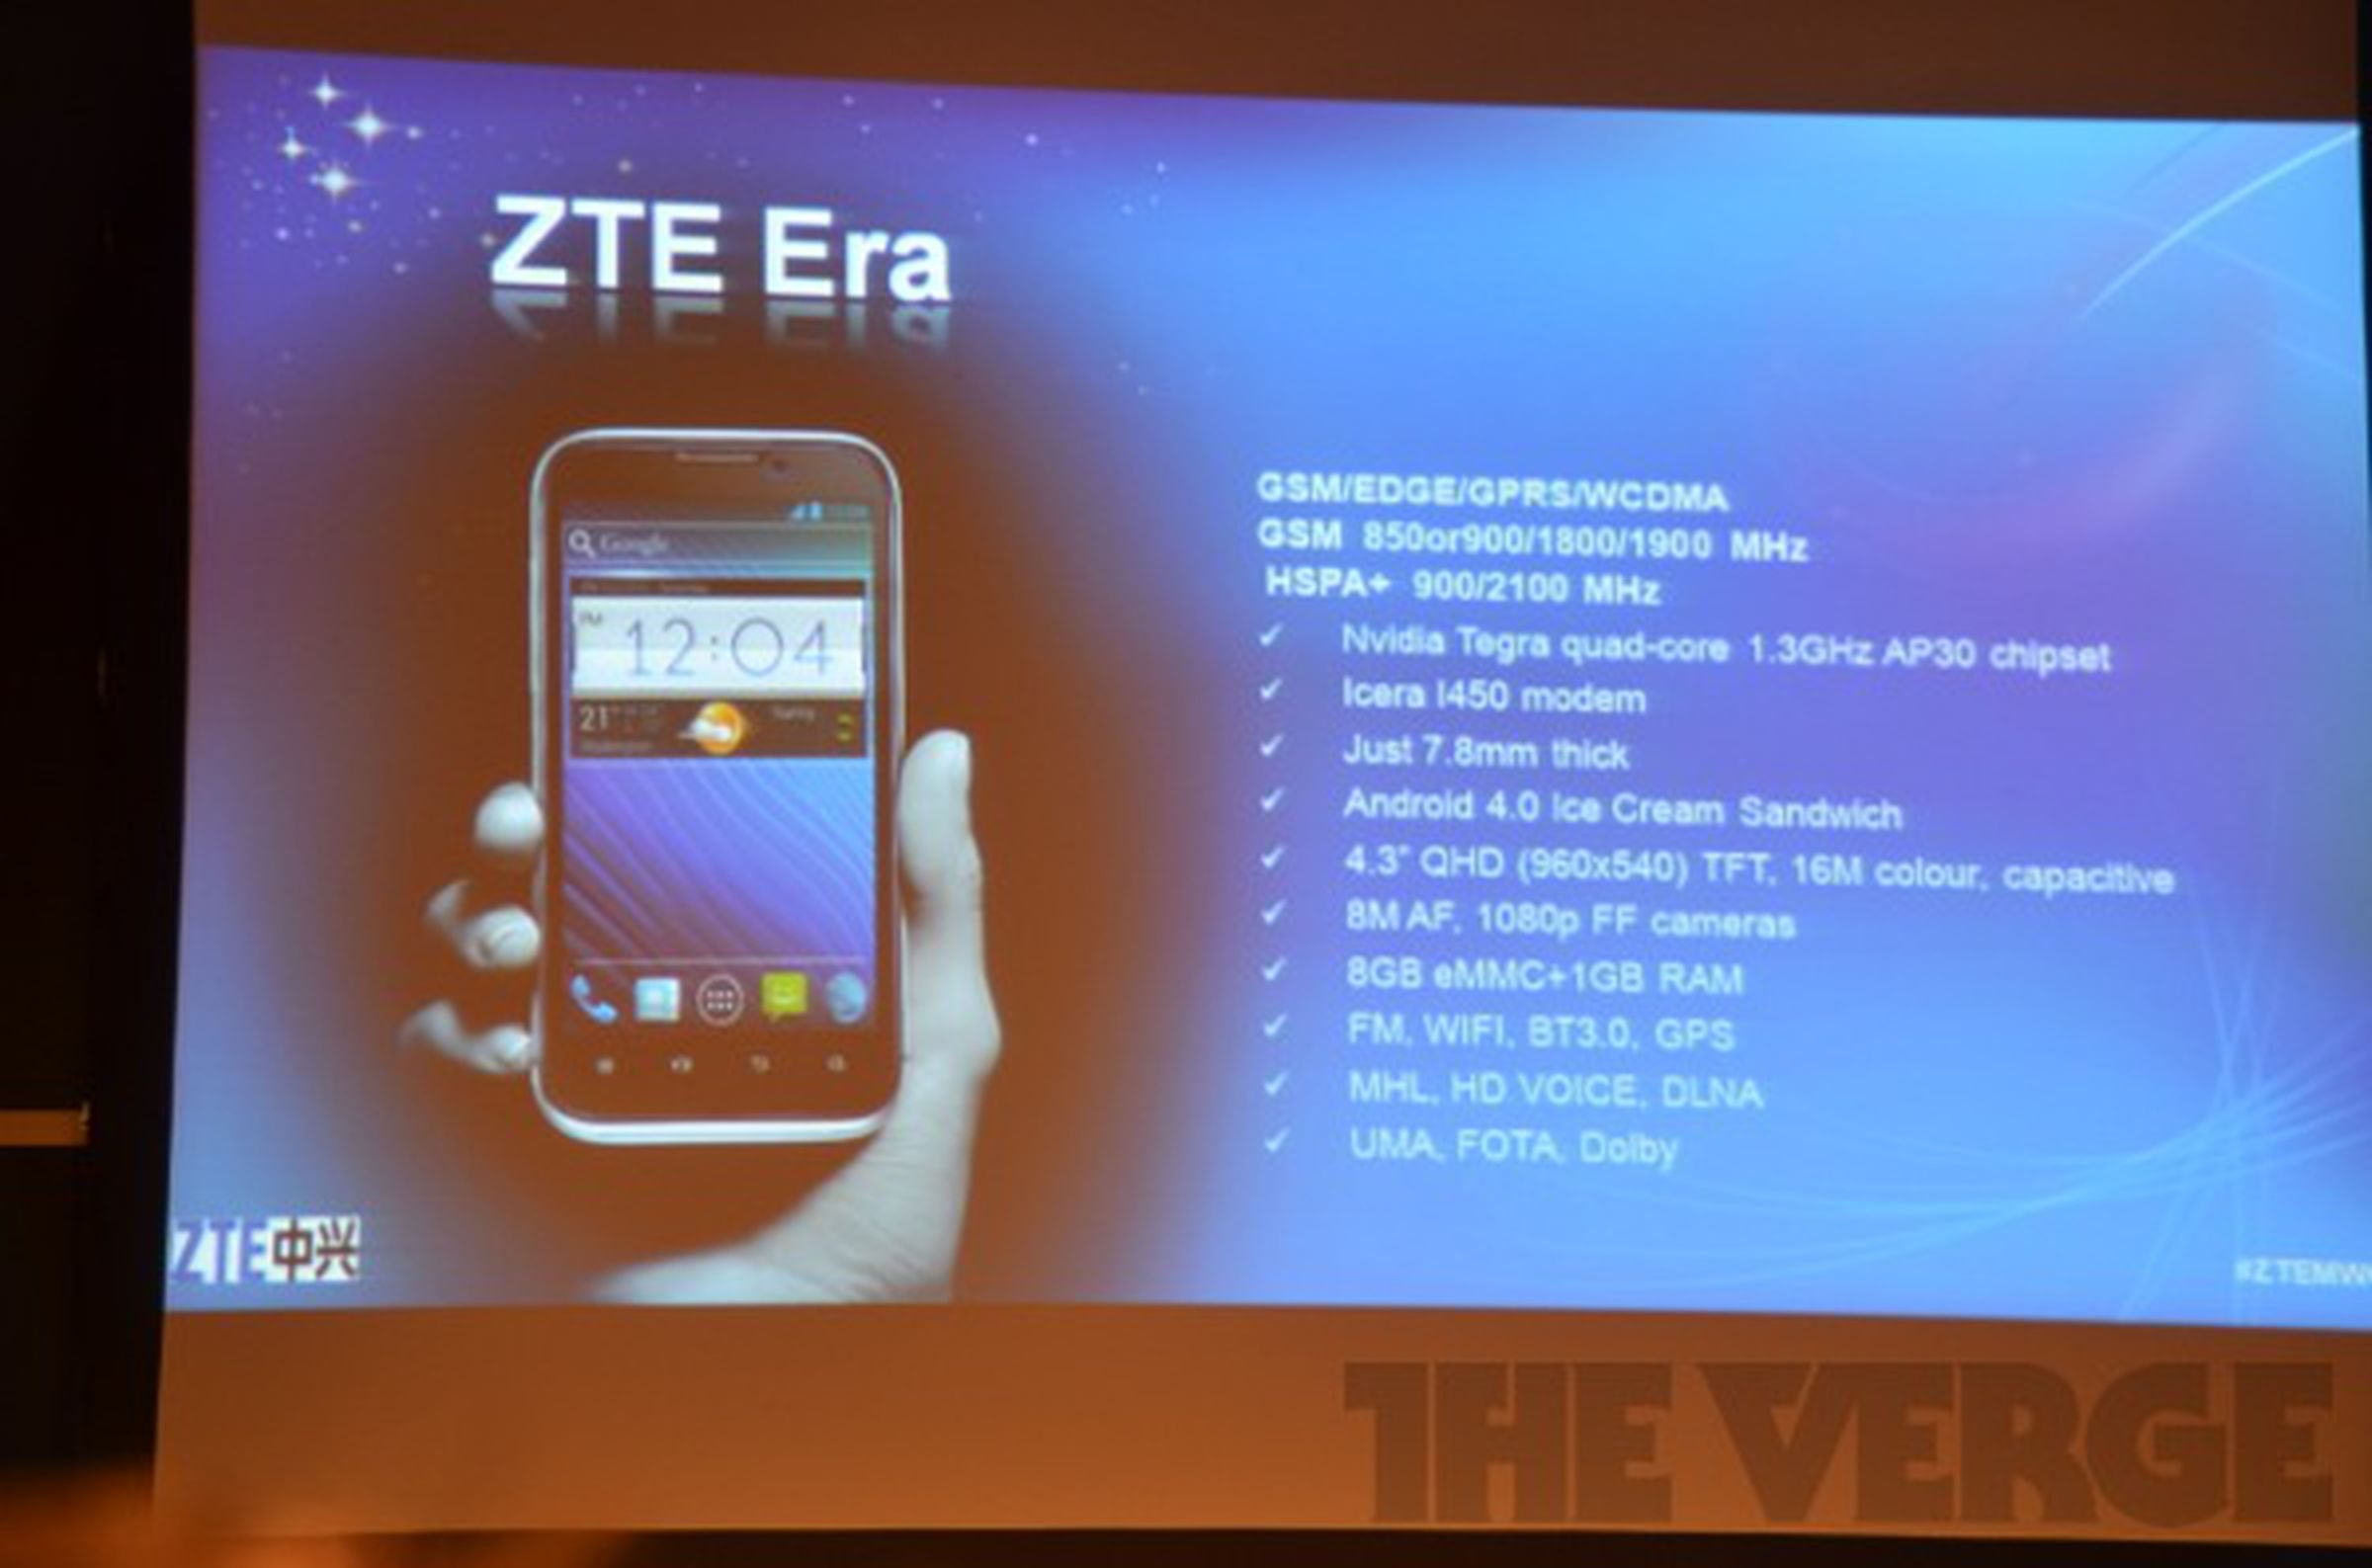 ZTE Era announcement images